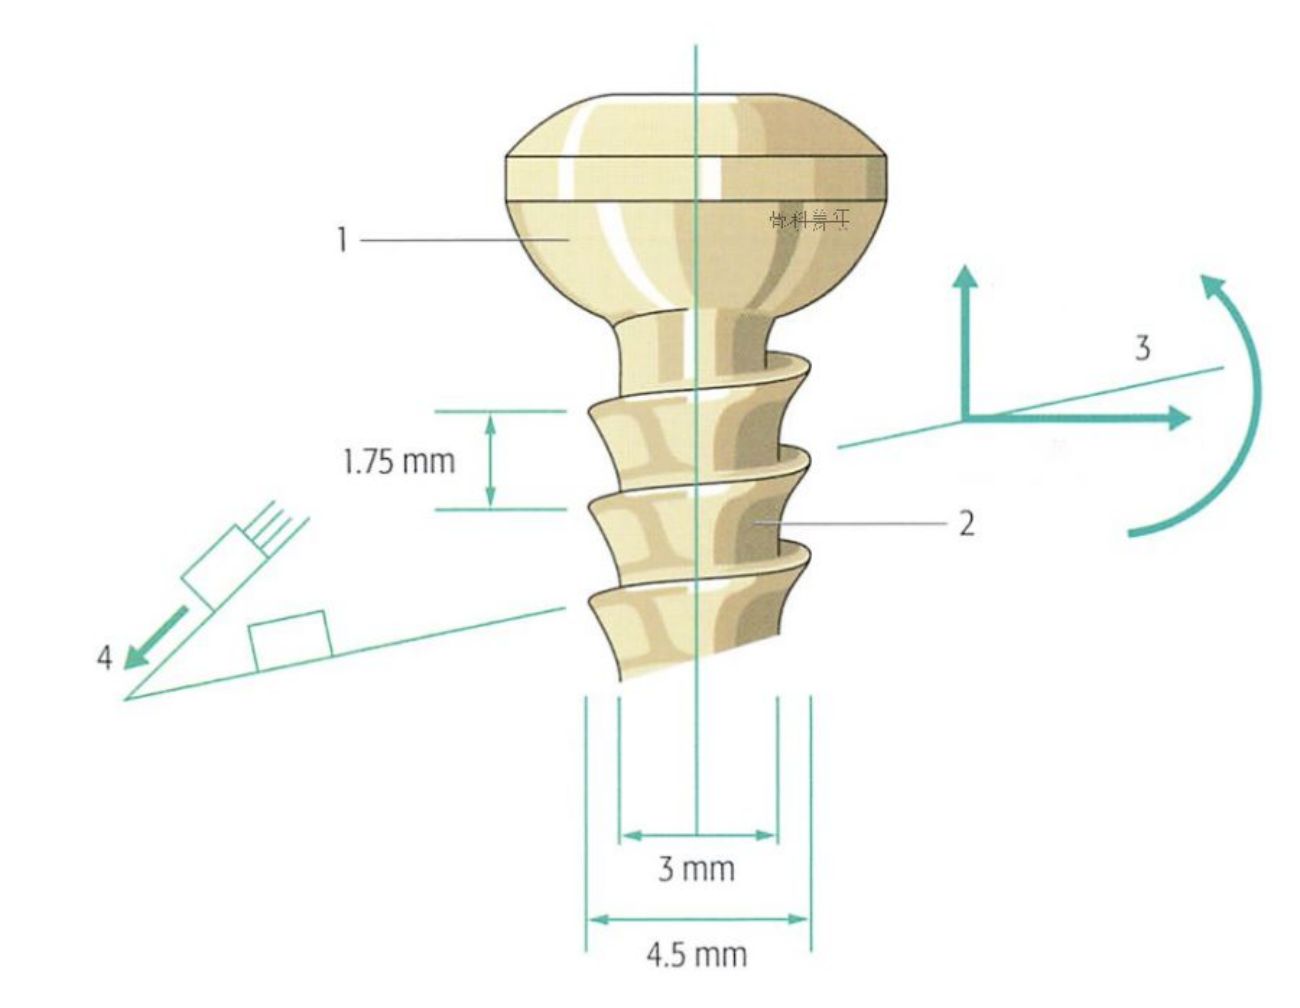 Orthopedic screws and the functions of screws